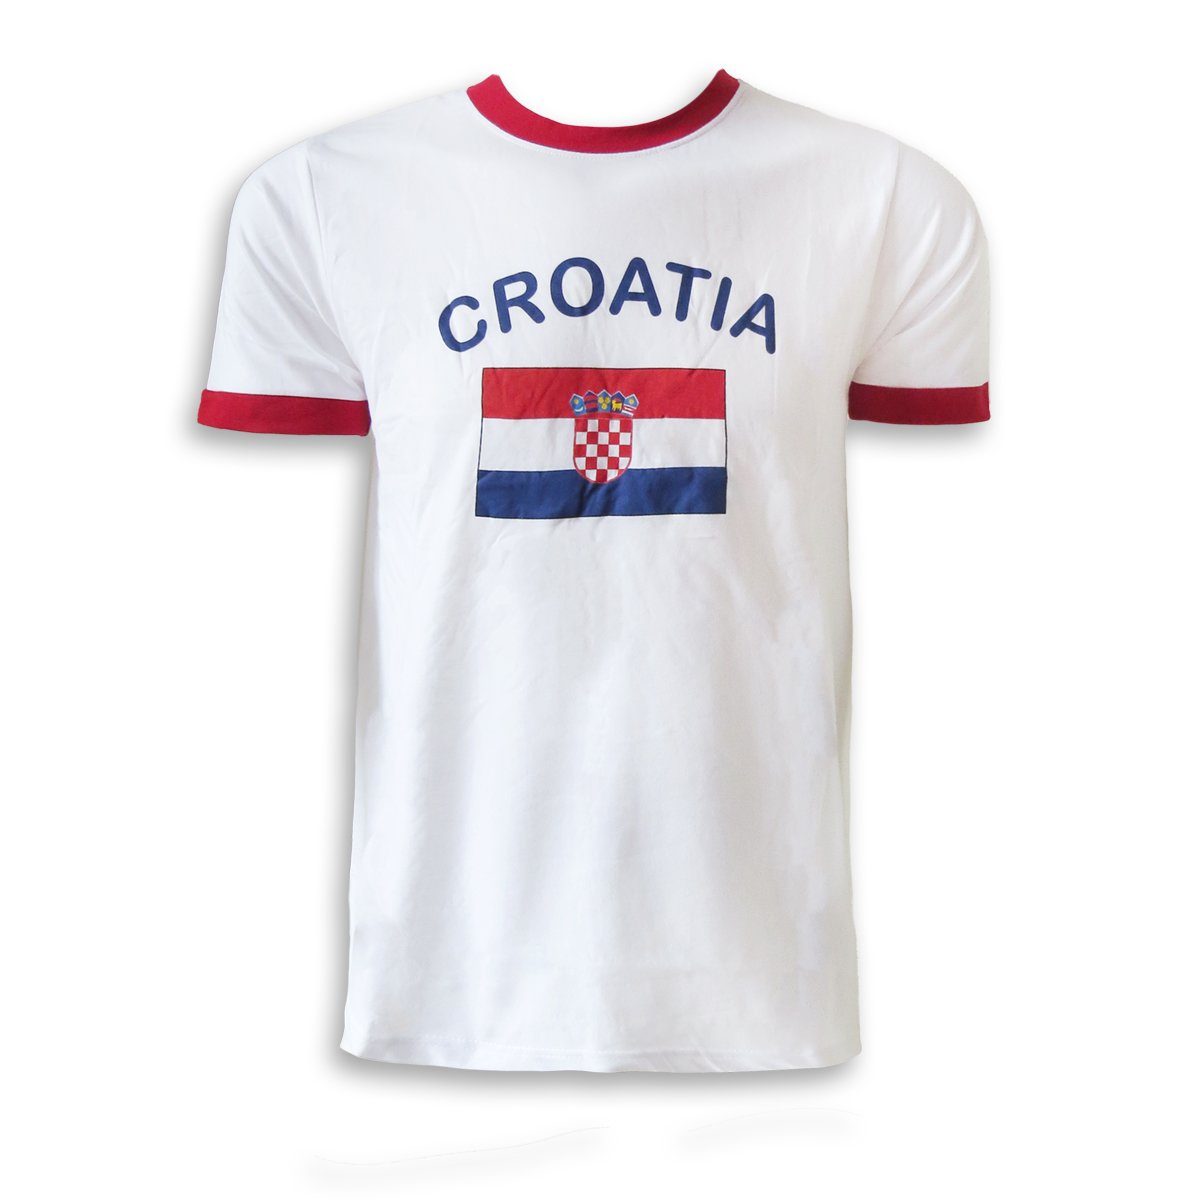 Sonia Originelli T-Shirt Fan-Shirt "Croatia" Unisex Fußball WM EM Herren T-Shirt